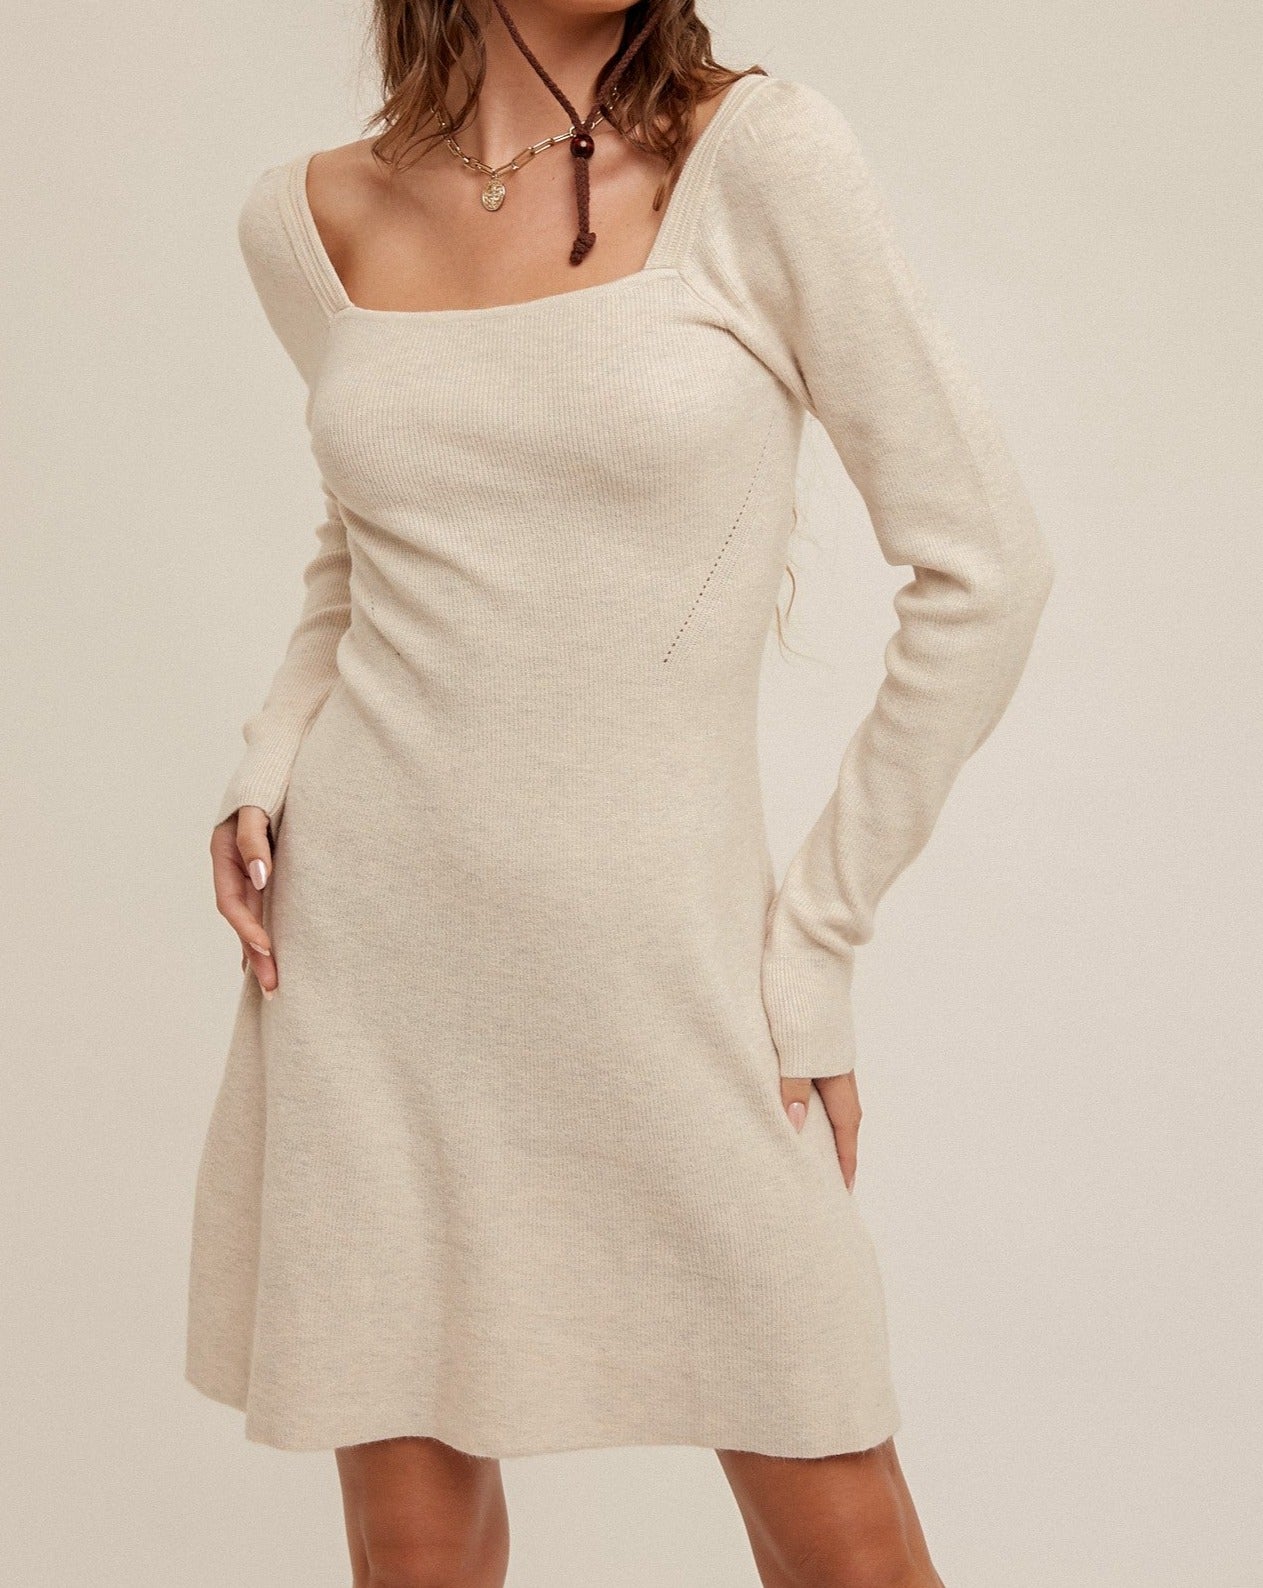 Kristi Ivory Sweater Dress